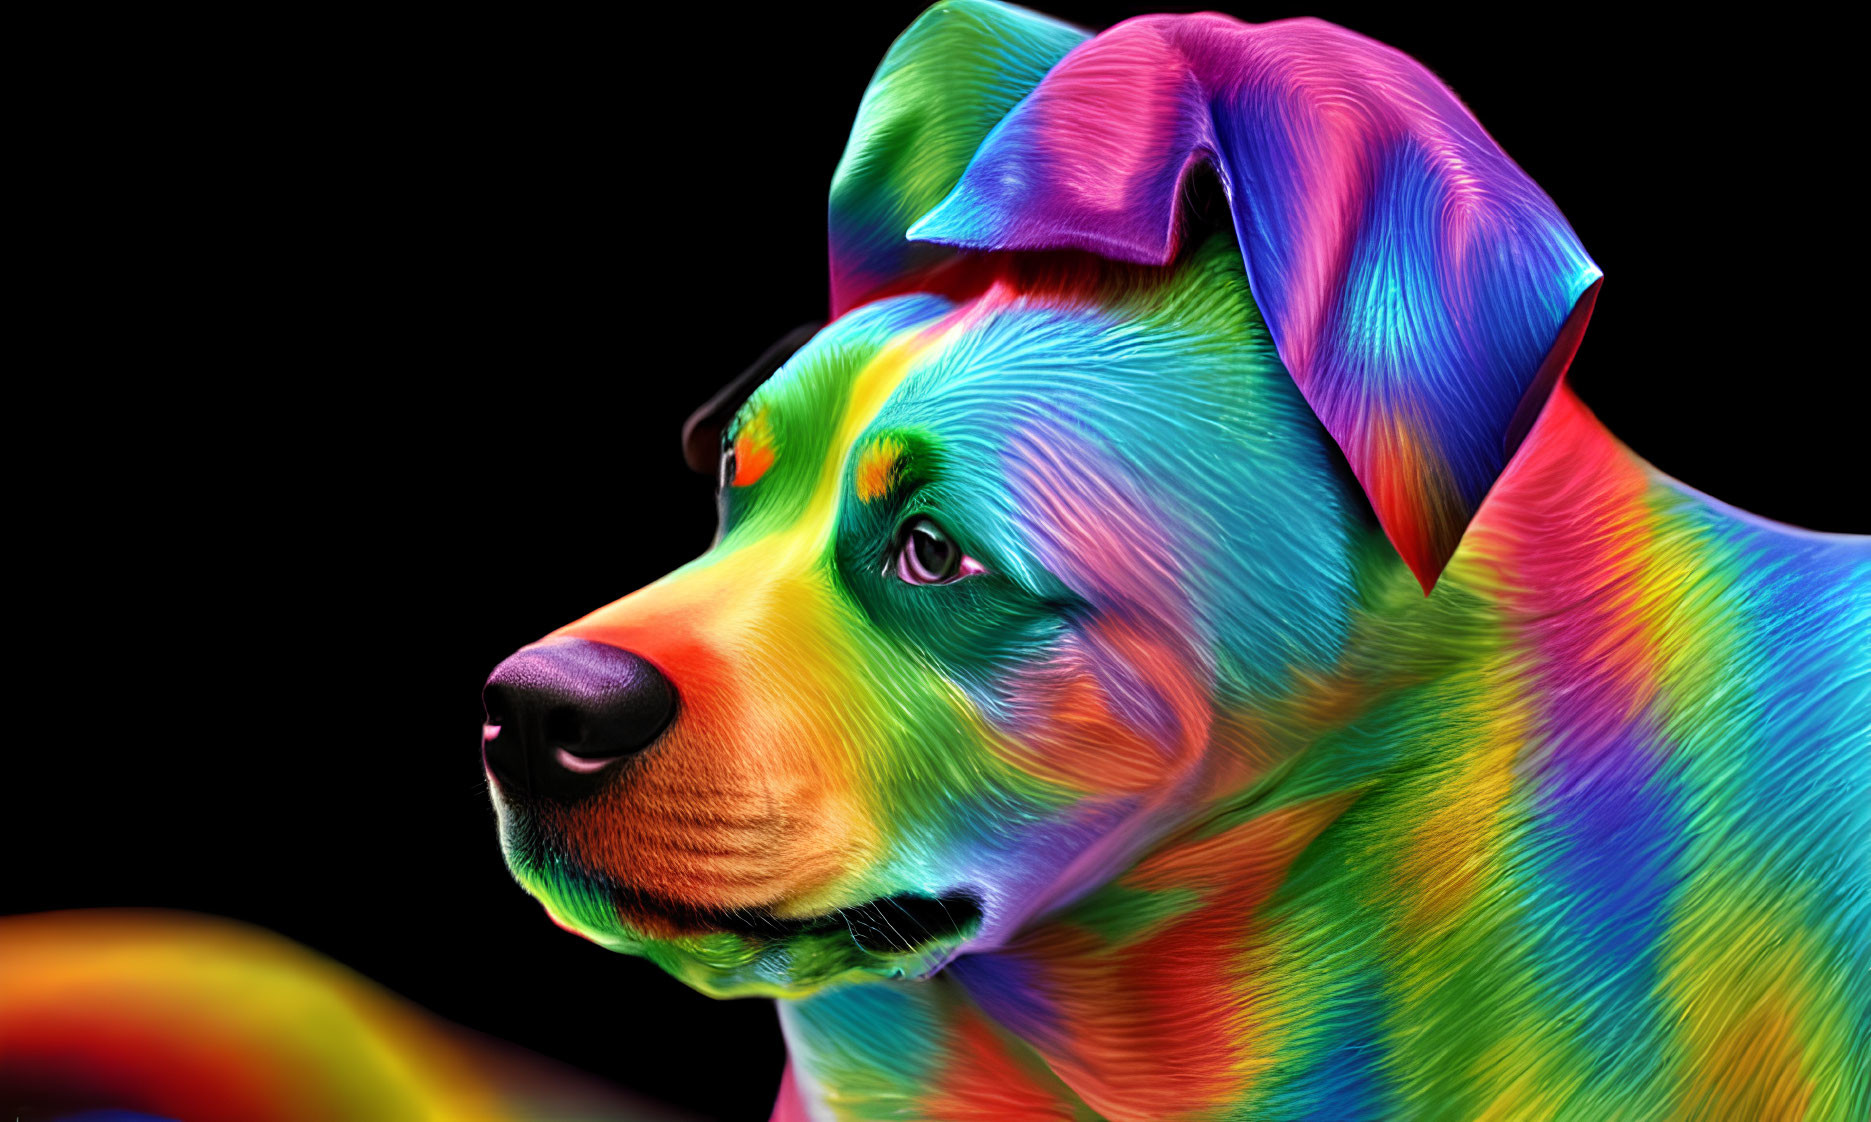 Multicolored neon dog artwork on dark background